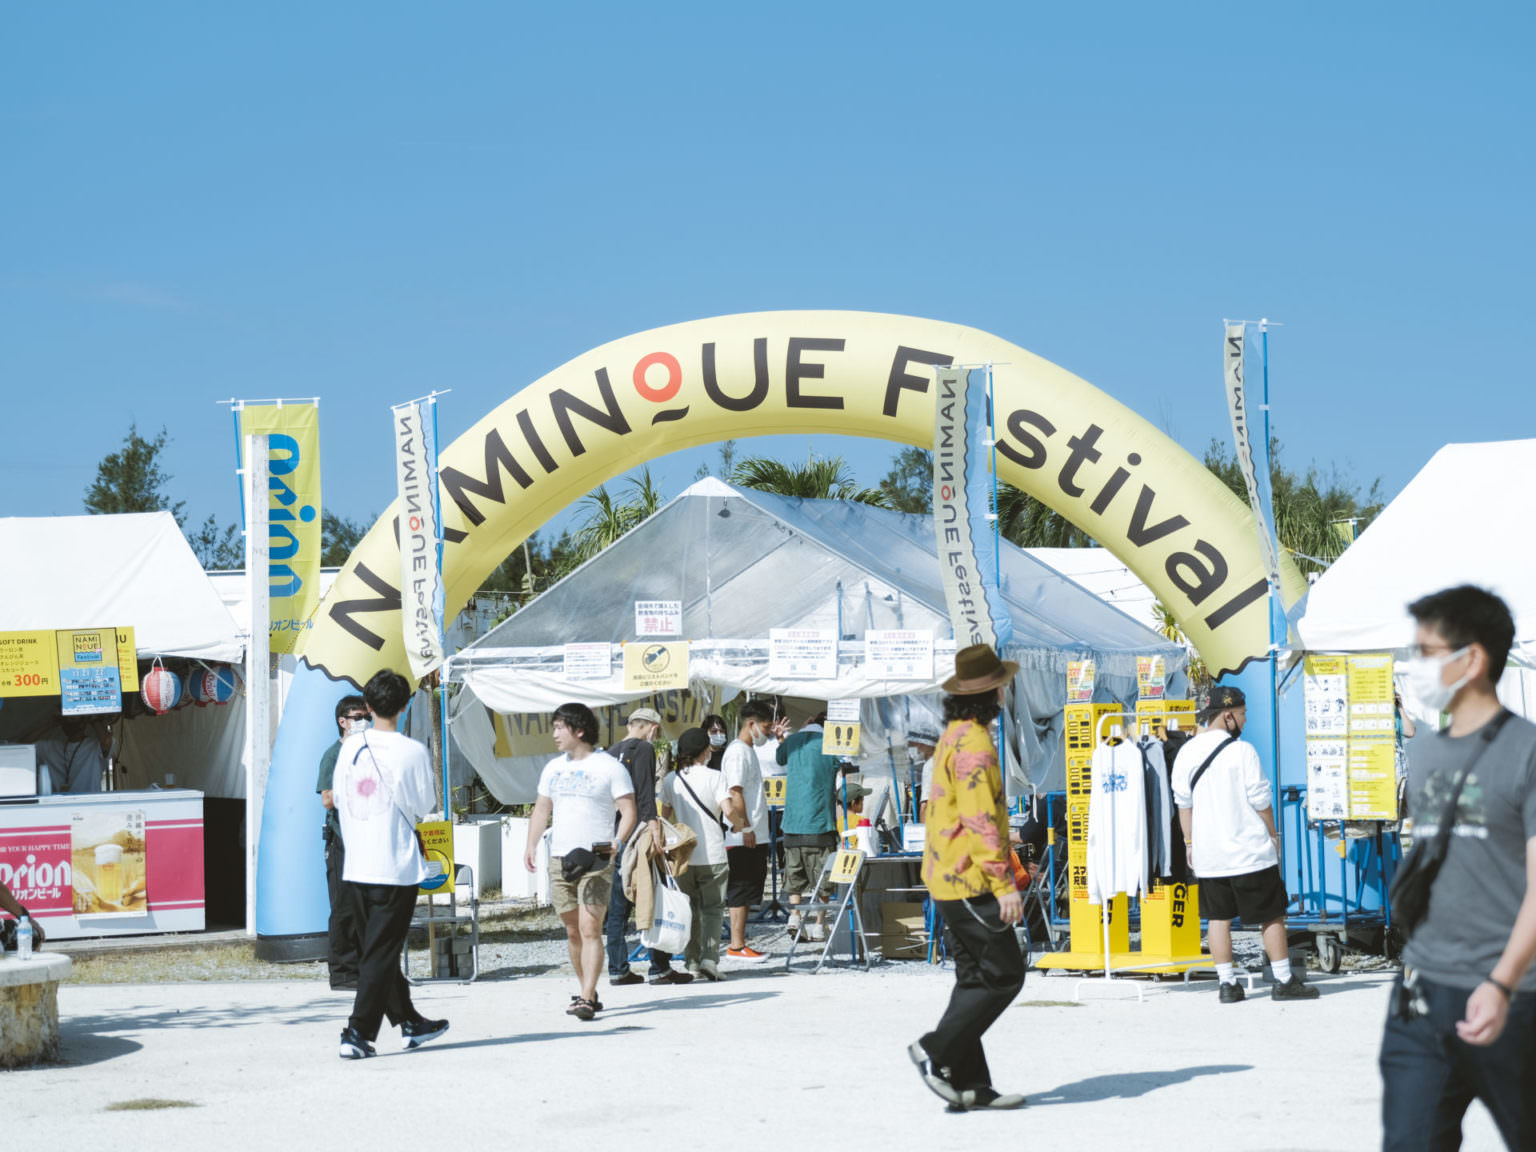 NAMINOUE Festival 2021が今年も開催！
全アーティスト・コンテンツ最終発表！